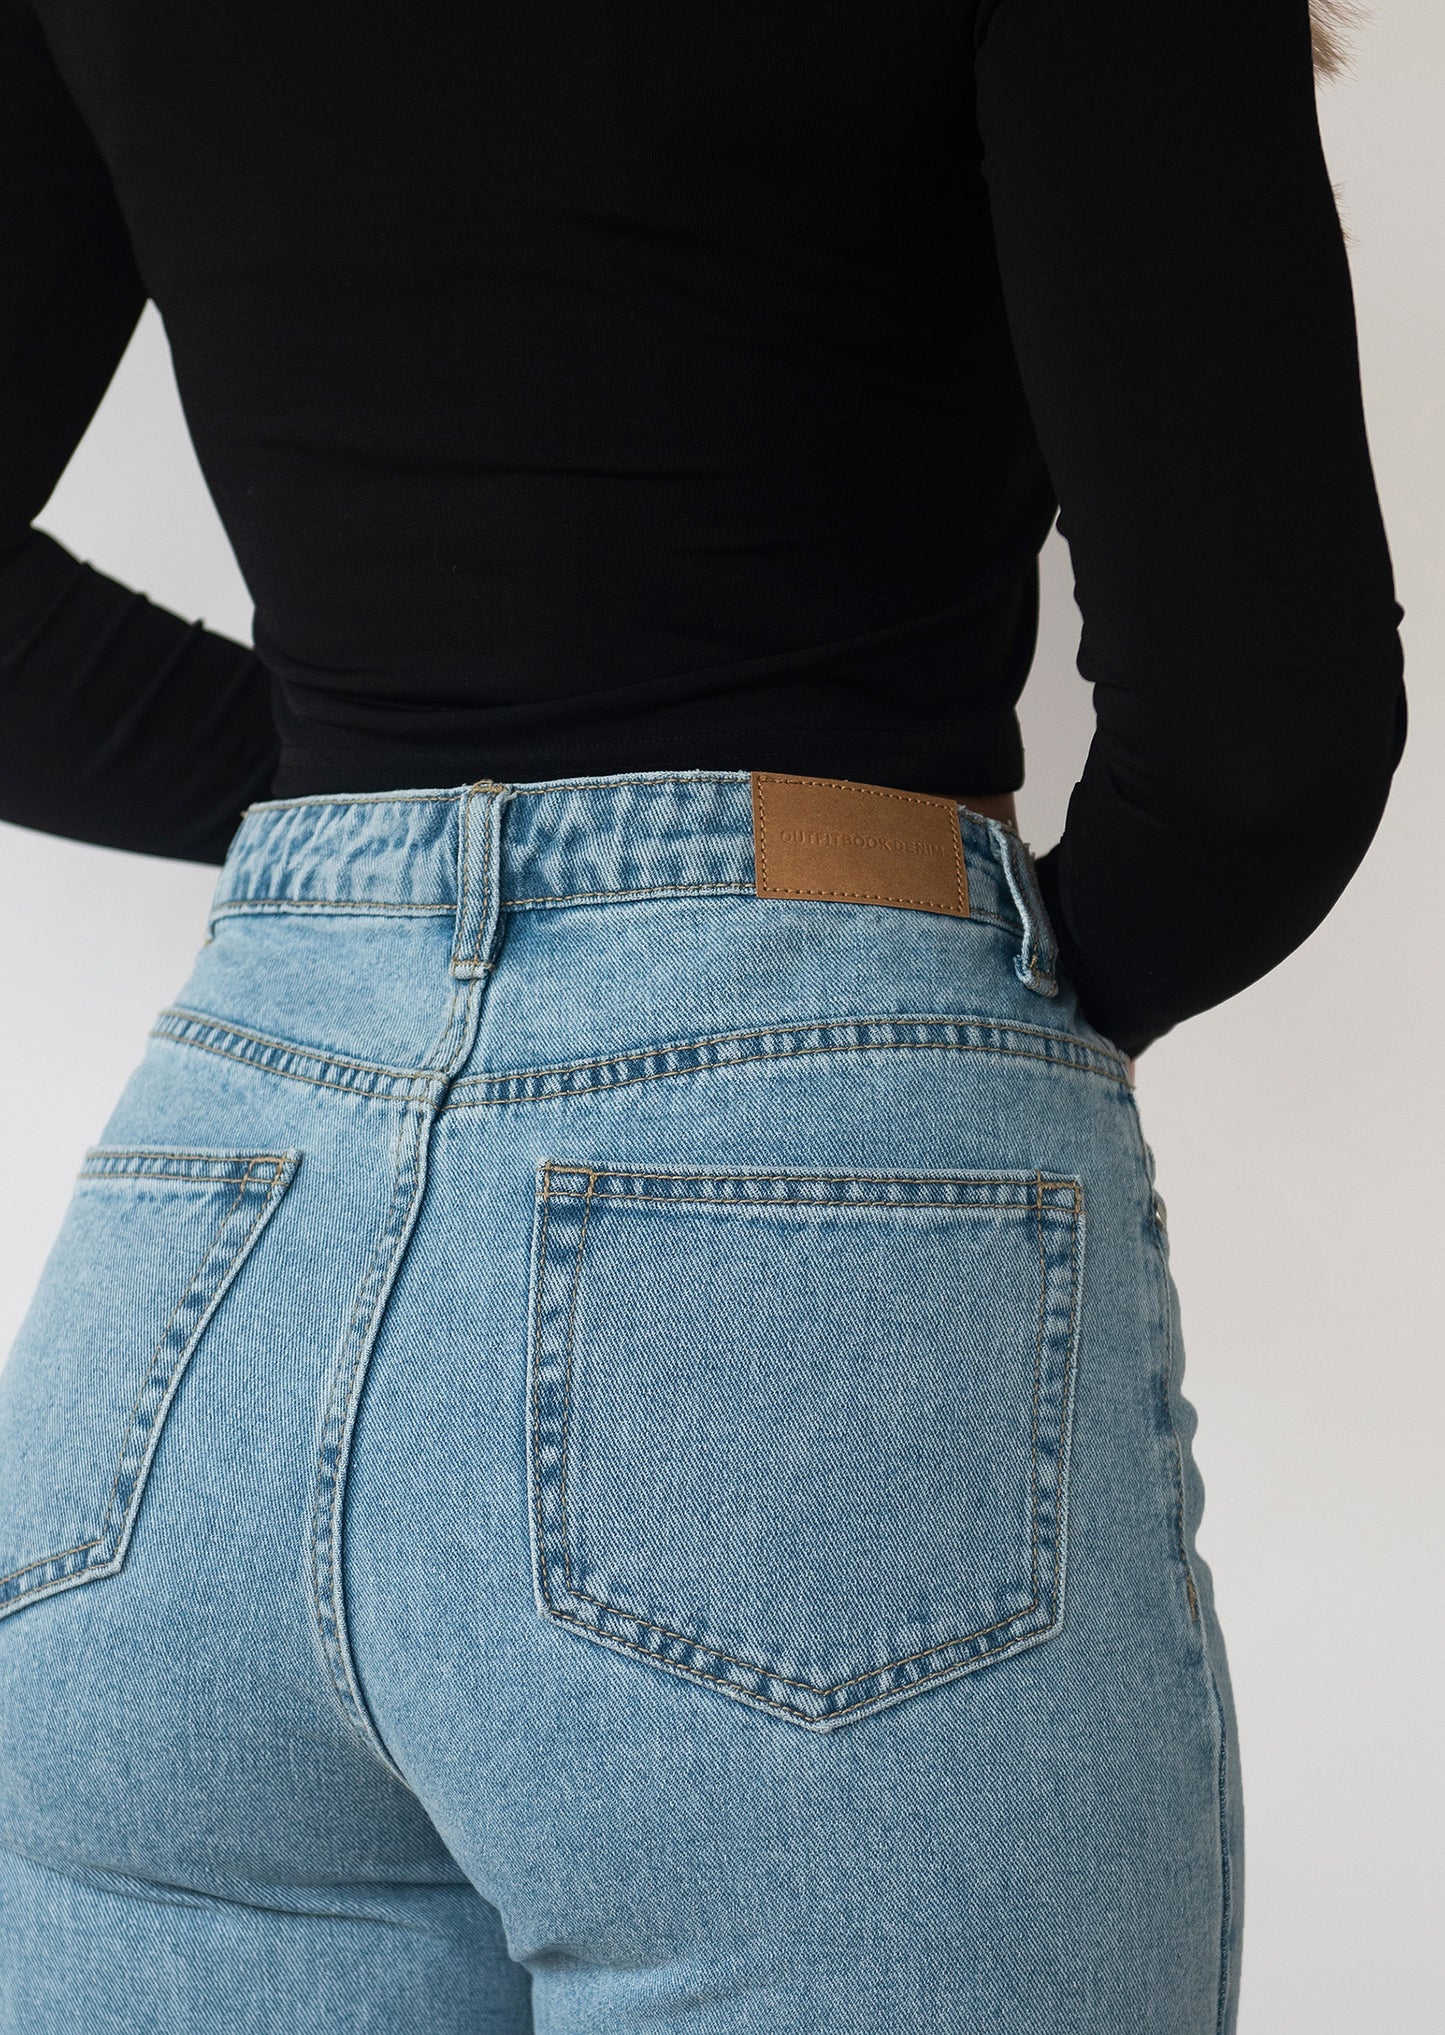 Jeans with asymmetric belt in blue